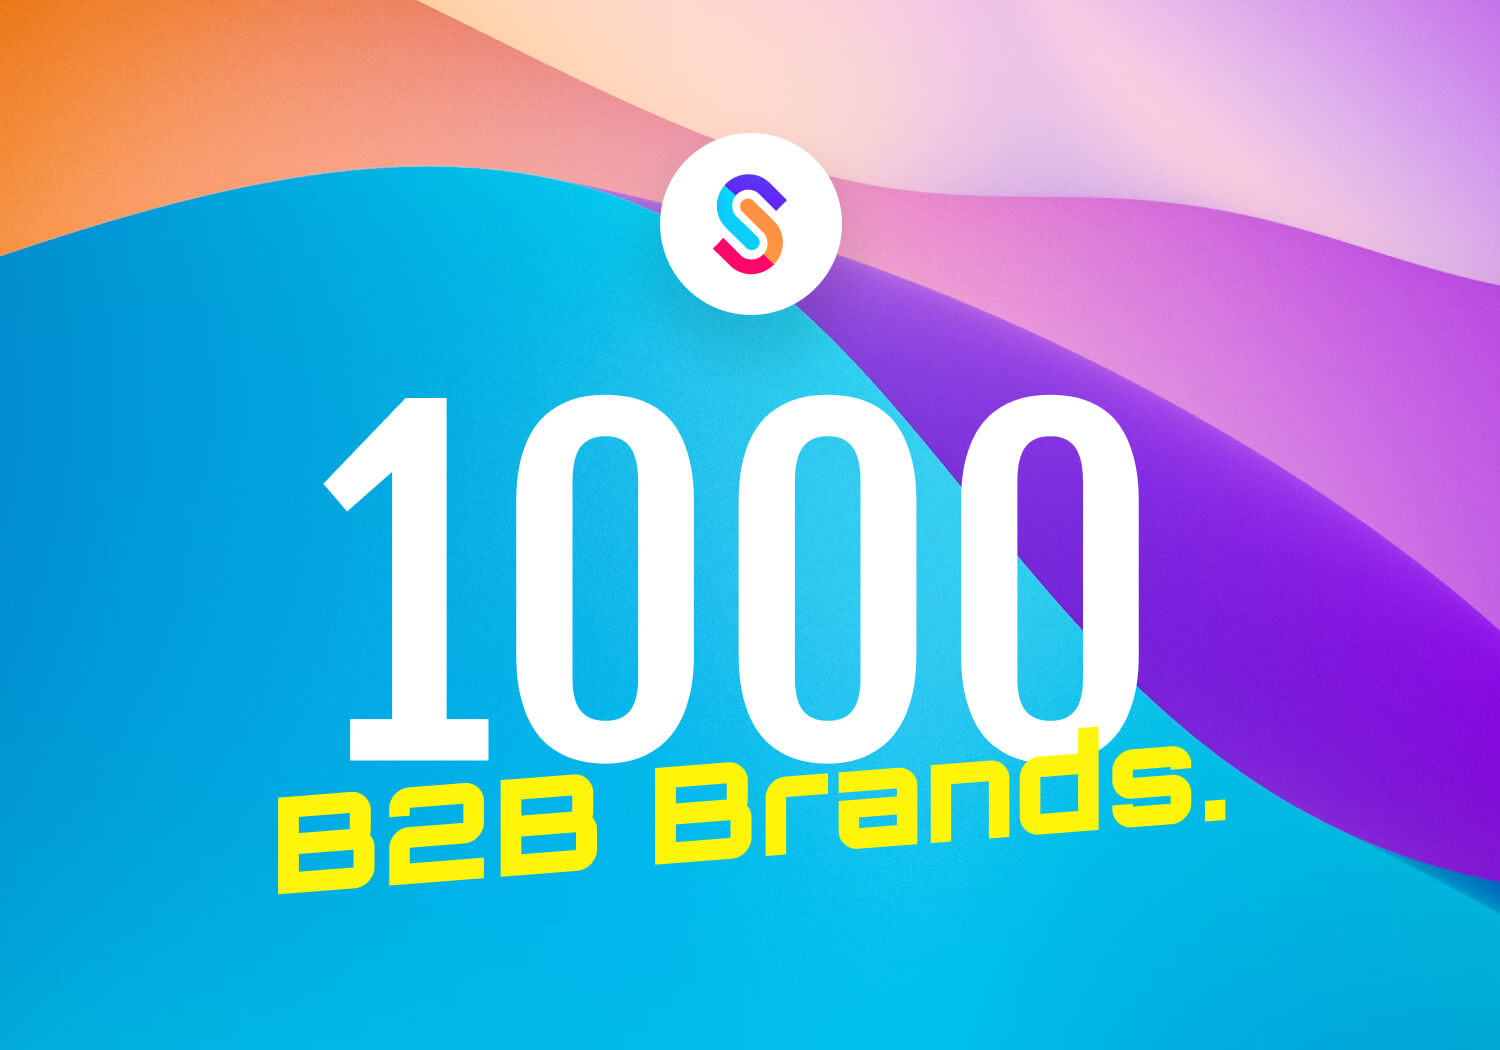 Powering success for 1,000 customers - SparkLayer celebrates major milestone